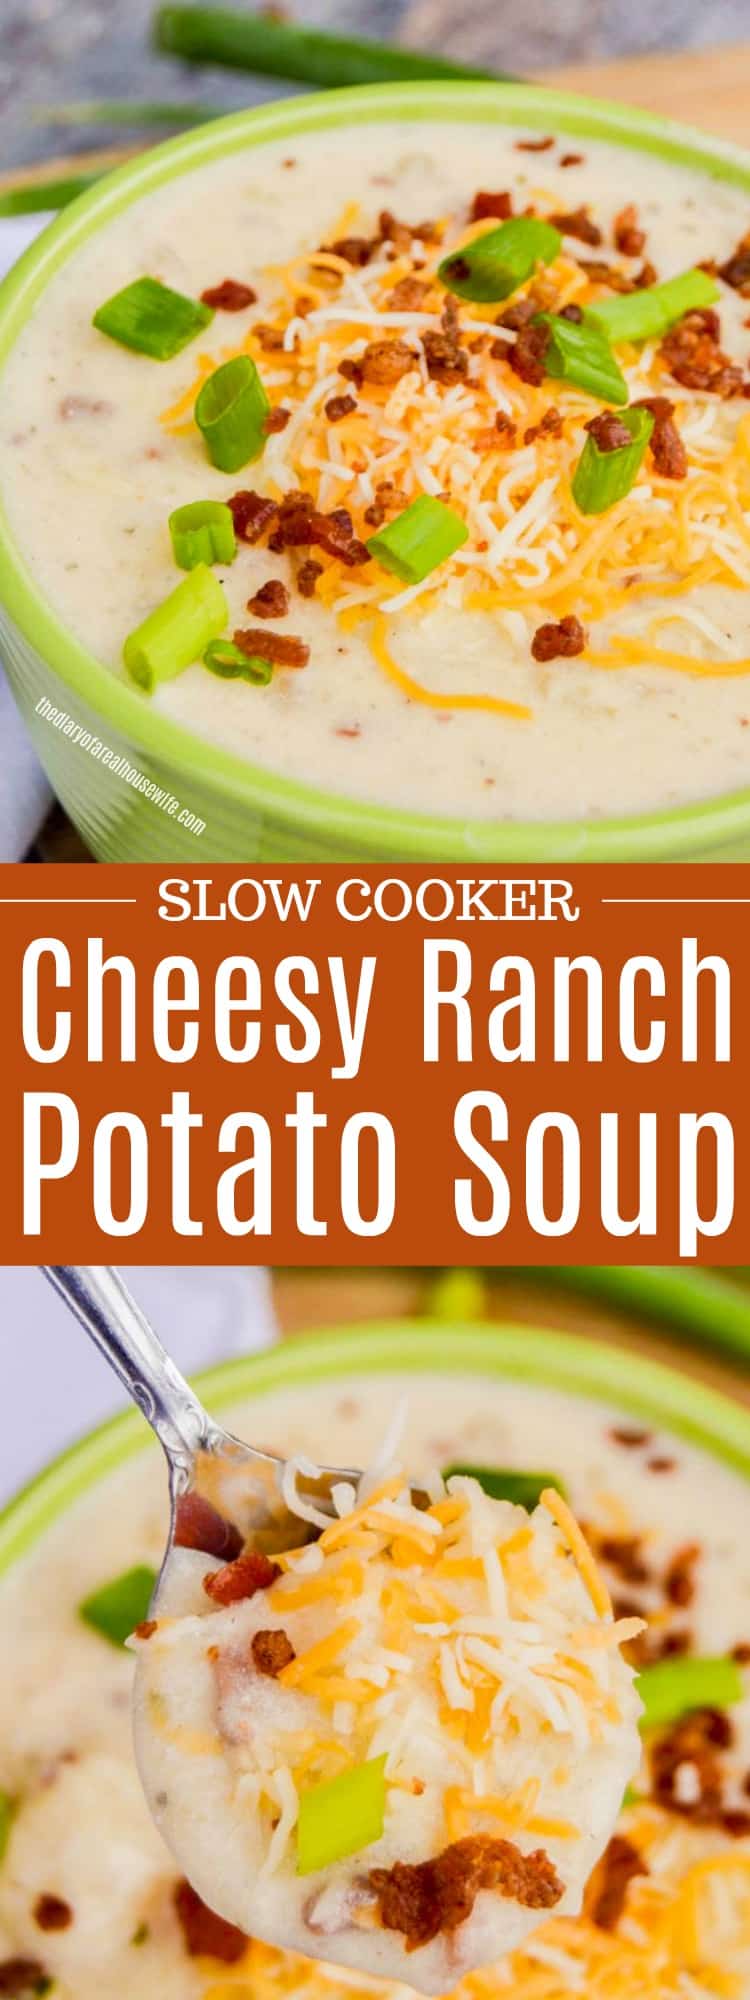 Slow Cooker Cheesy Ranch Potato Soup